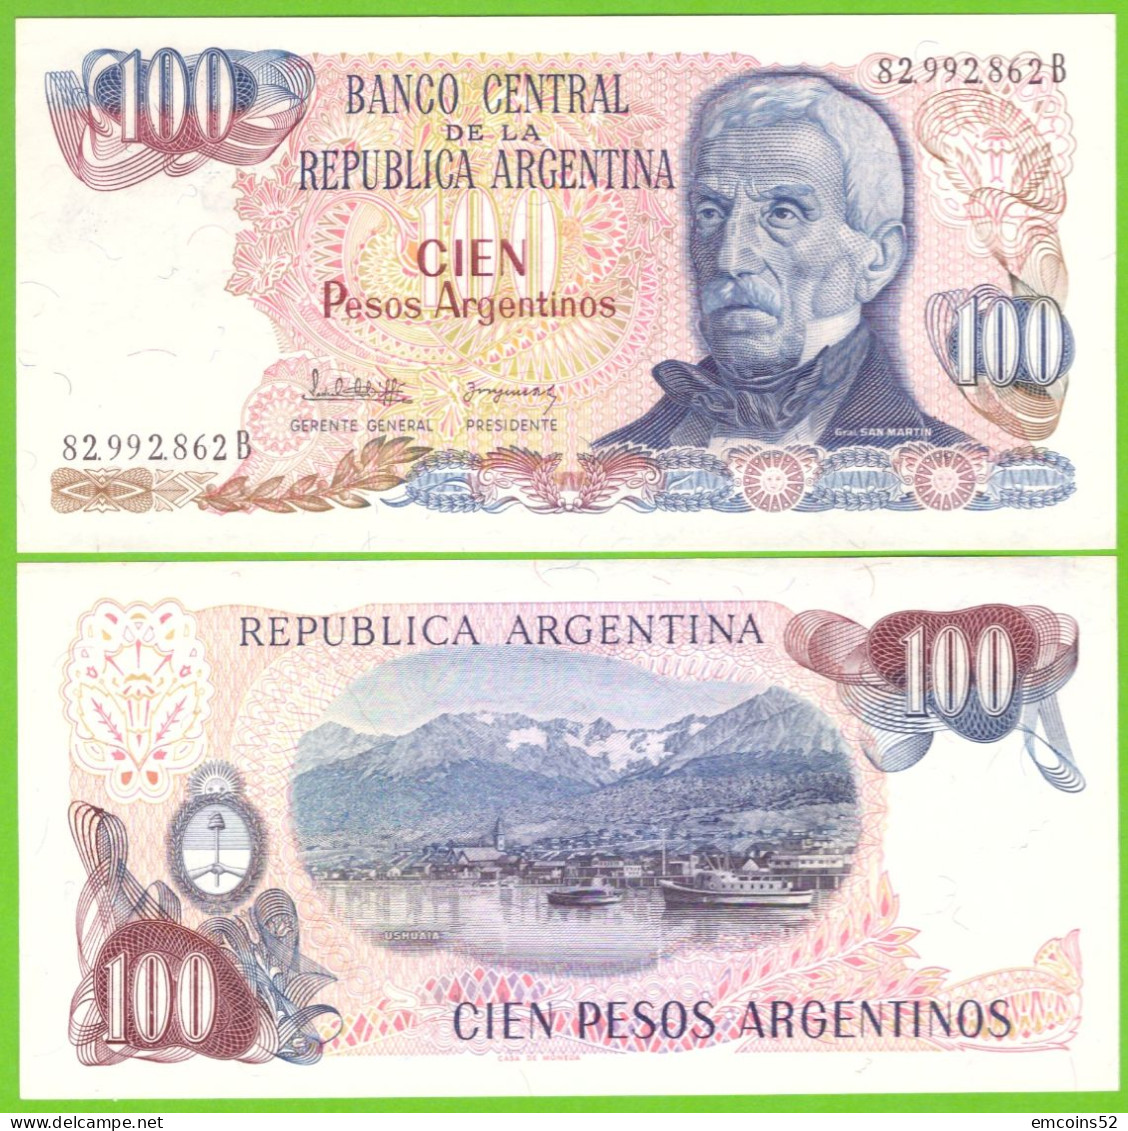 ARGENTINA 100 PESOS ND 1983/1985 P-315a(1) UNC - Argentine